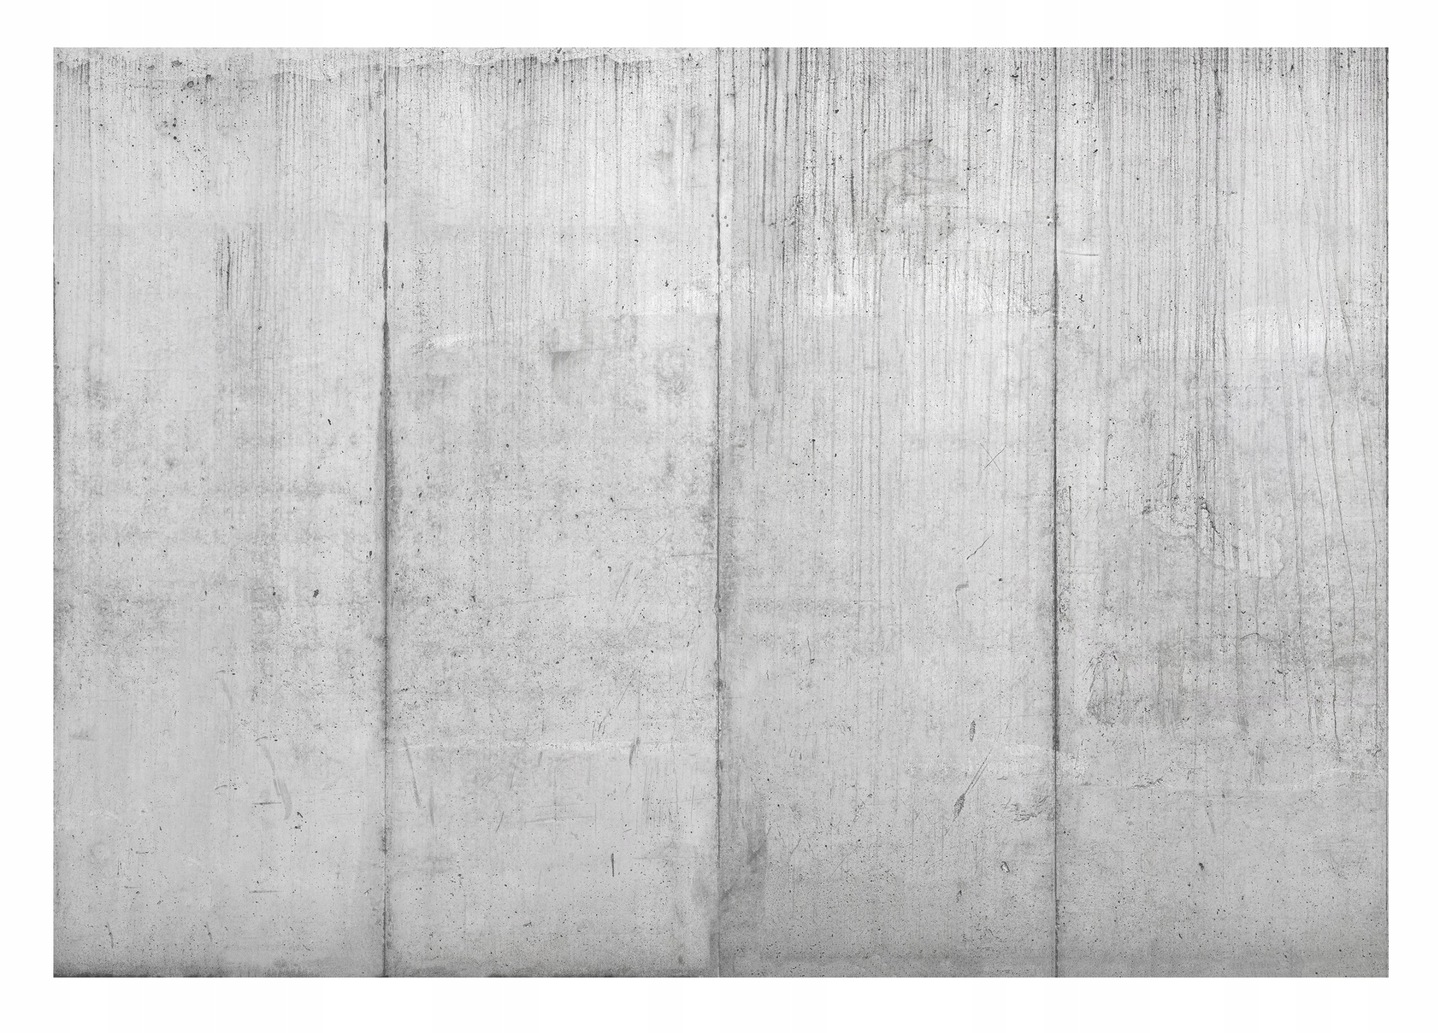 Fototapete Beton Gang 3D Effekt Grau Weiß 3,50 m x 2,55 m FSC